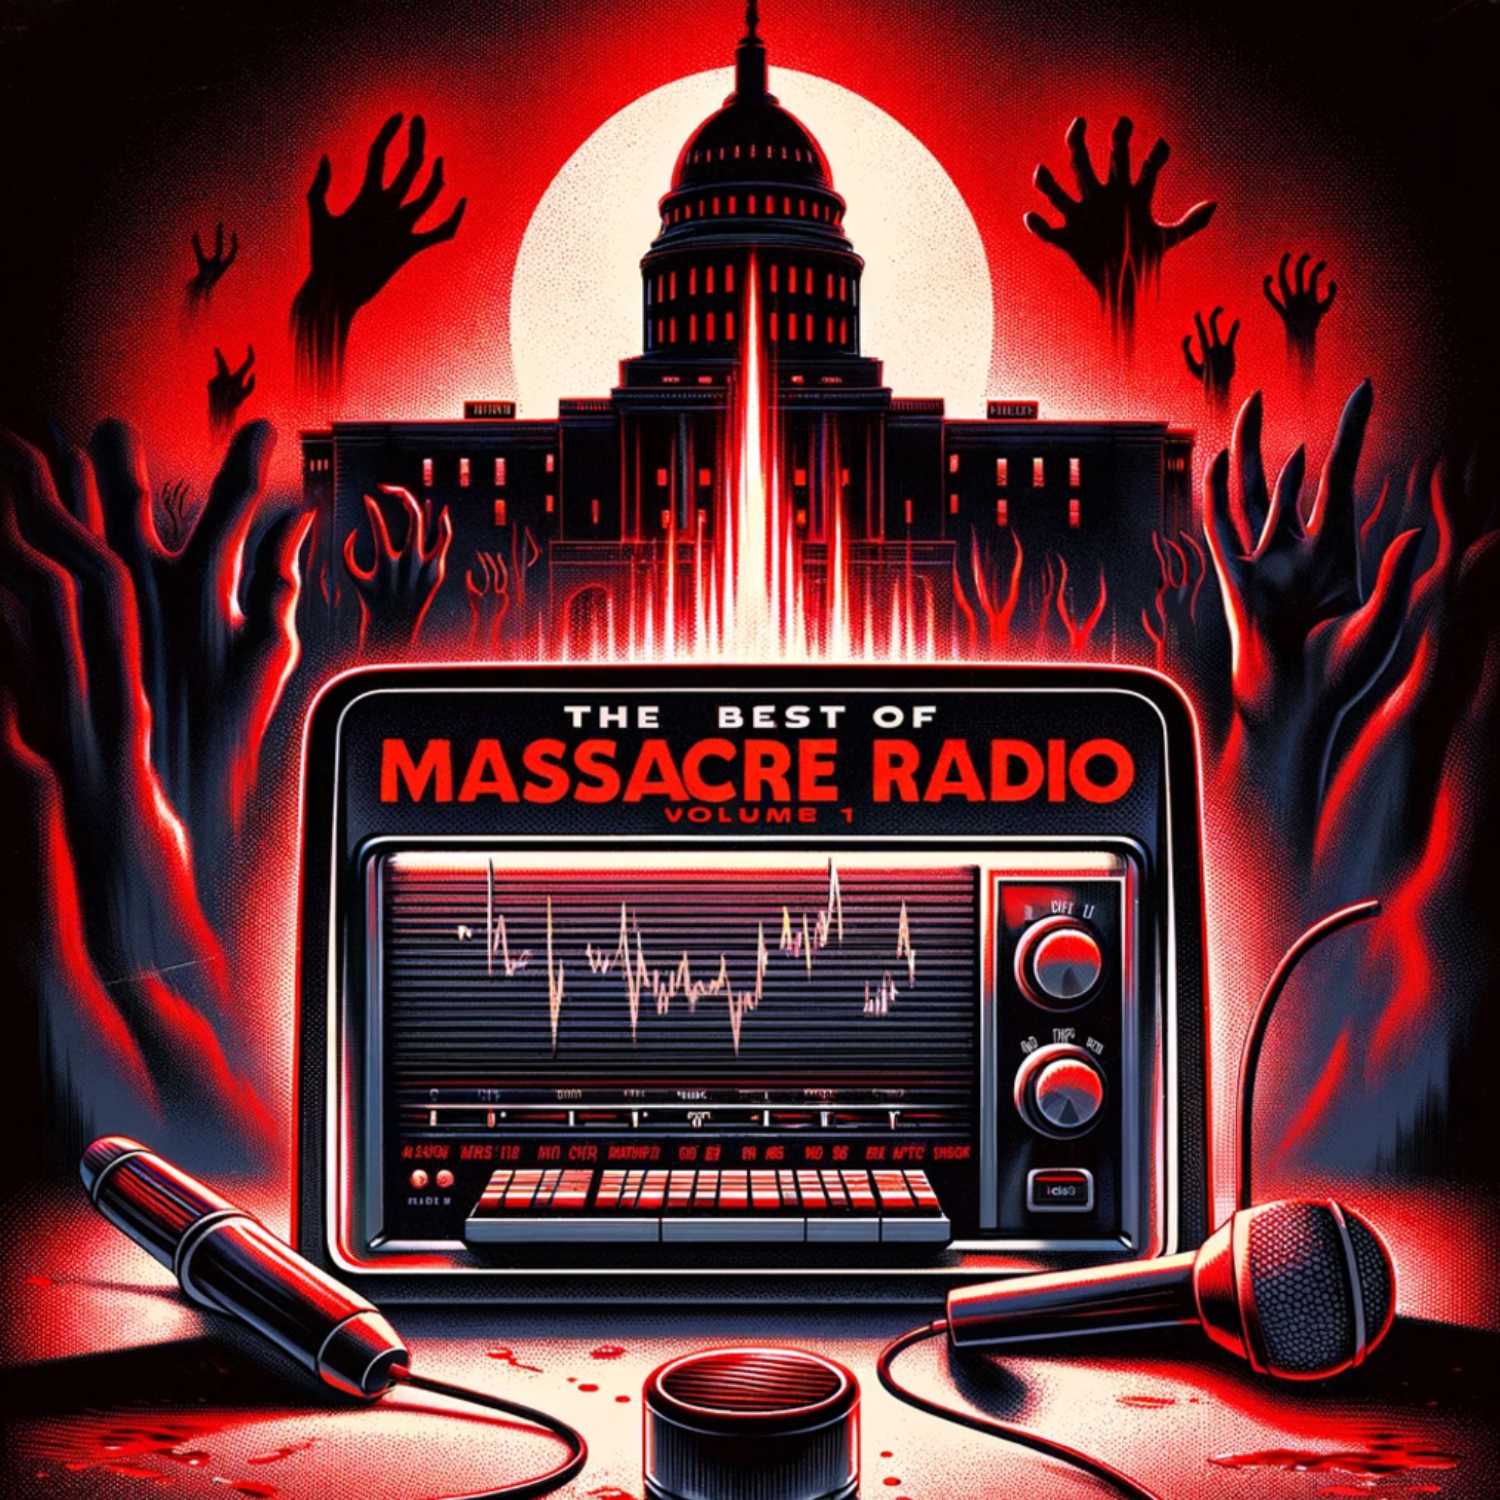 The Best of Massacre Radio Volume 1